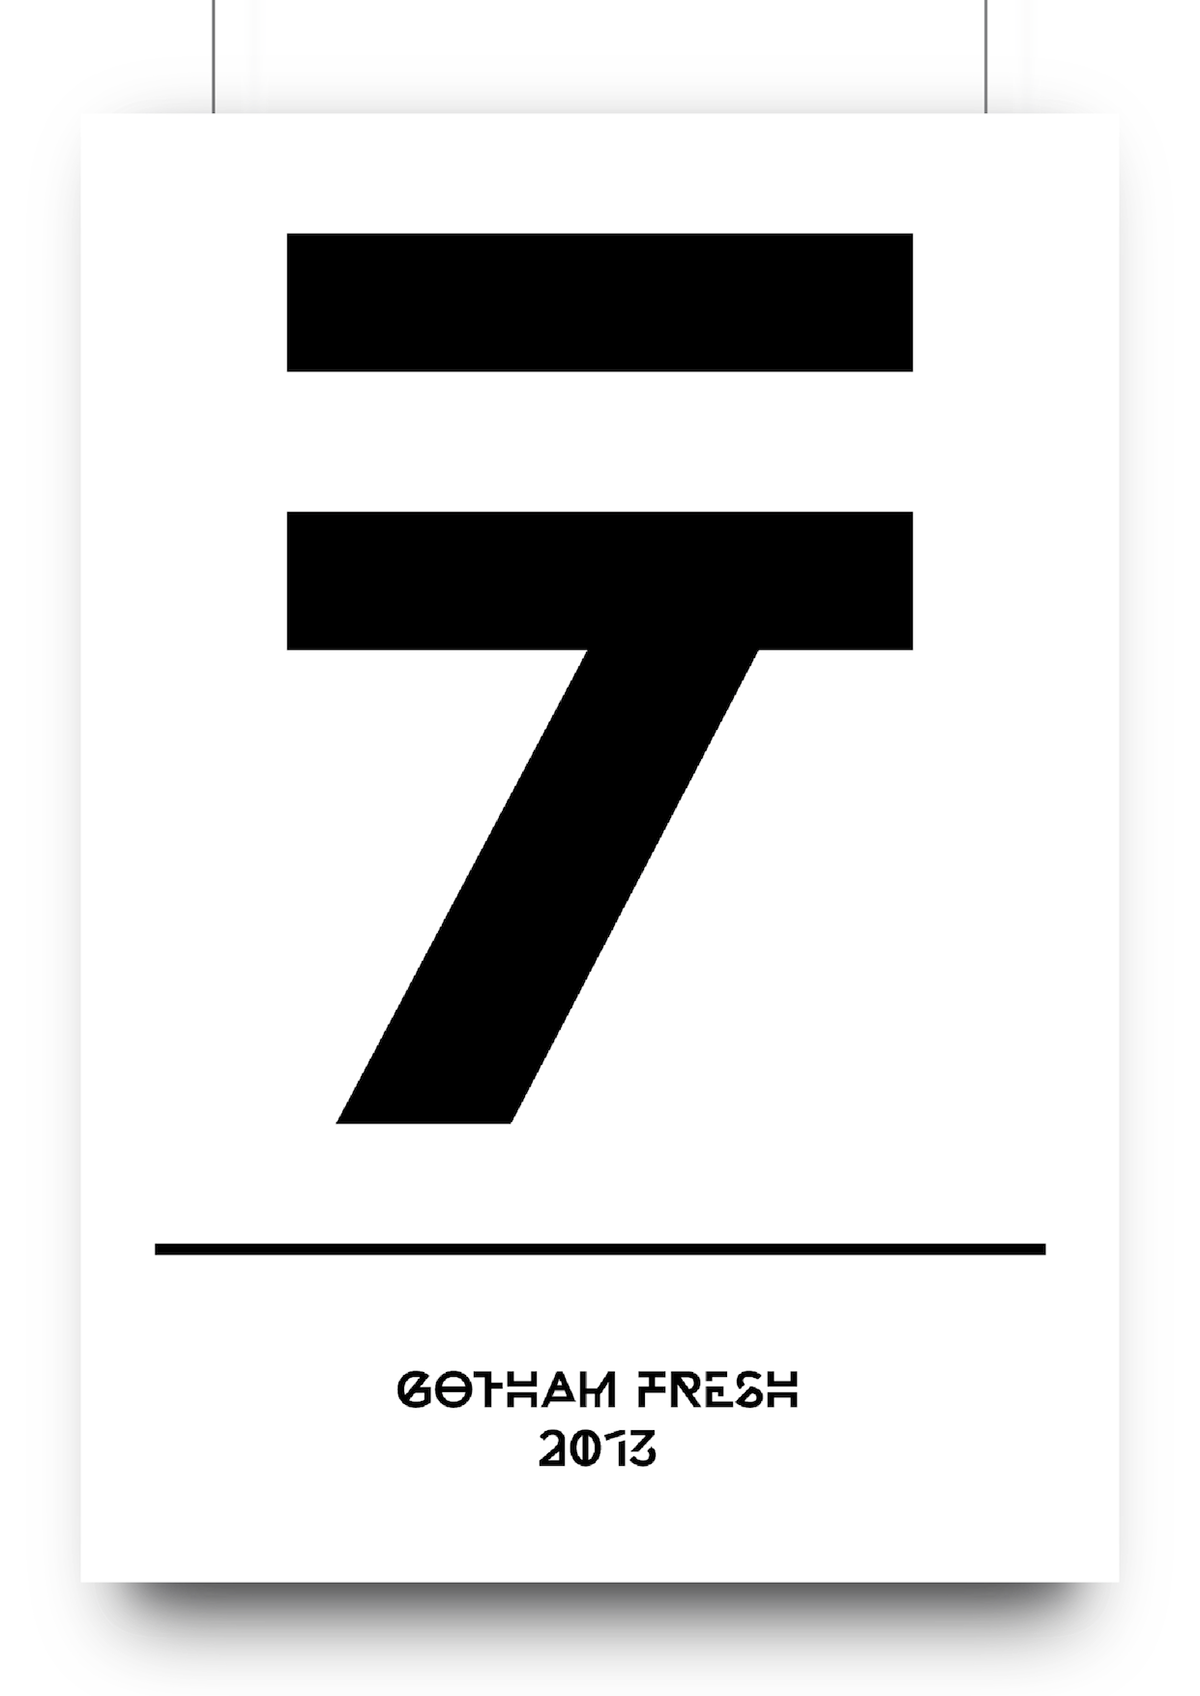 experimental font new fresh gotham gotham fresh olaf lyczba budapest bold type typo redesign lines font design